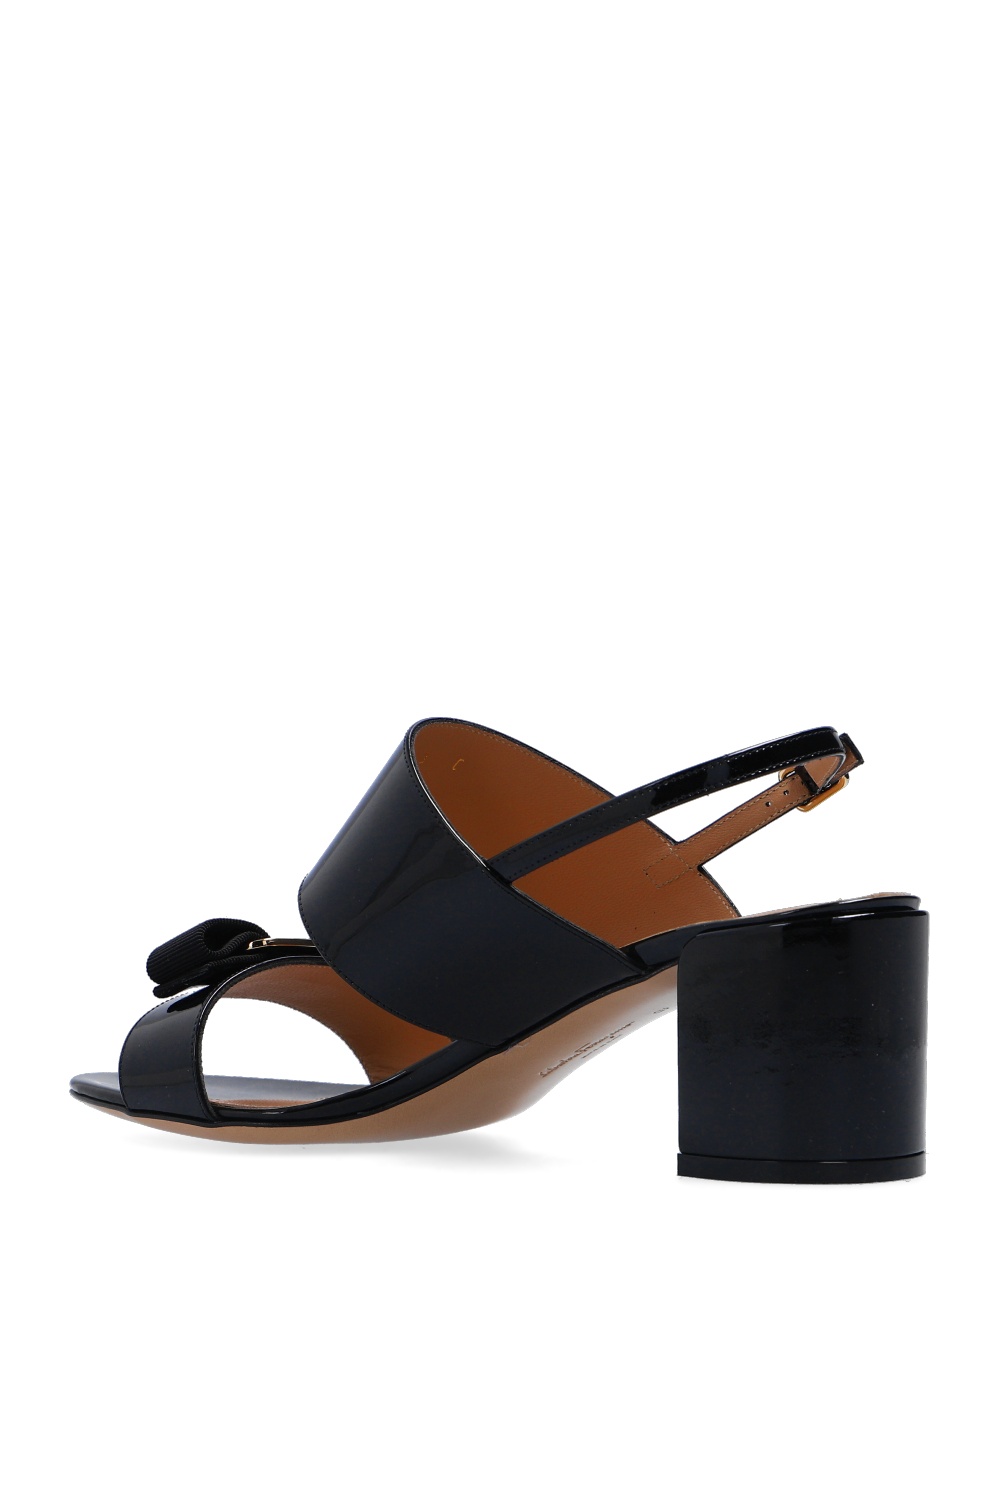 Women's Shoes | Salvatore Ferragamo Leather sandals | SALVATORE 